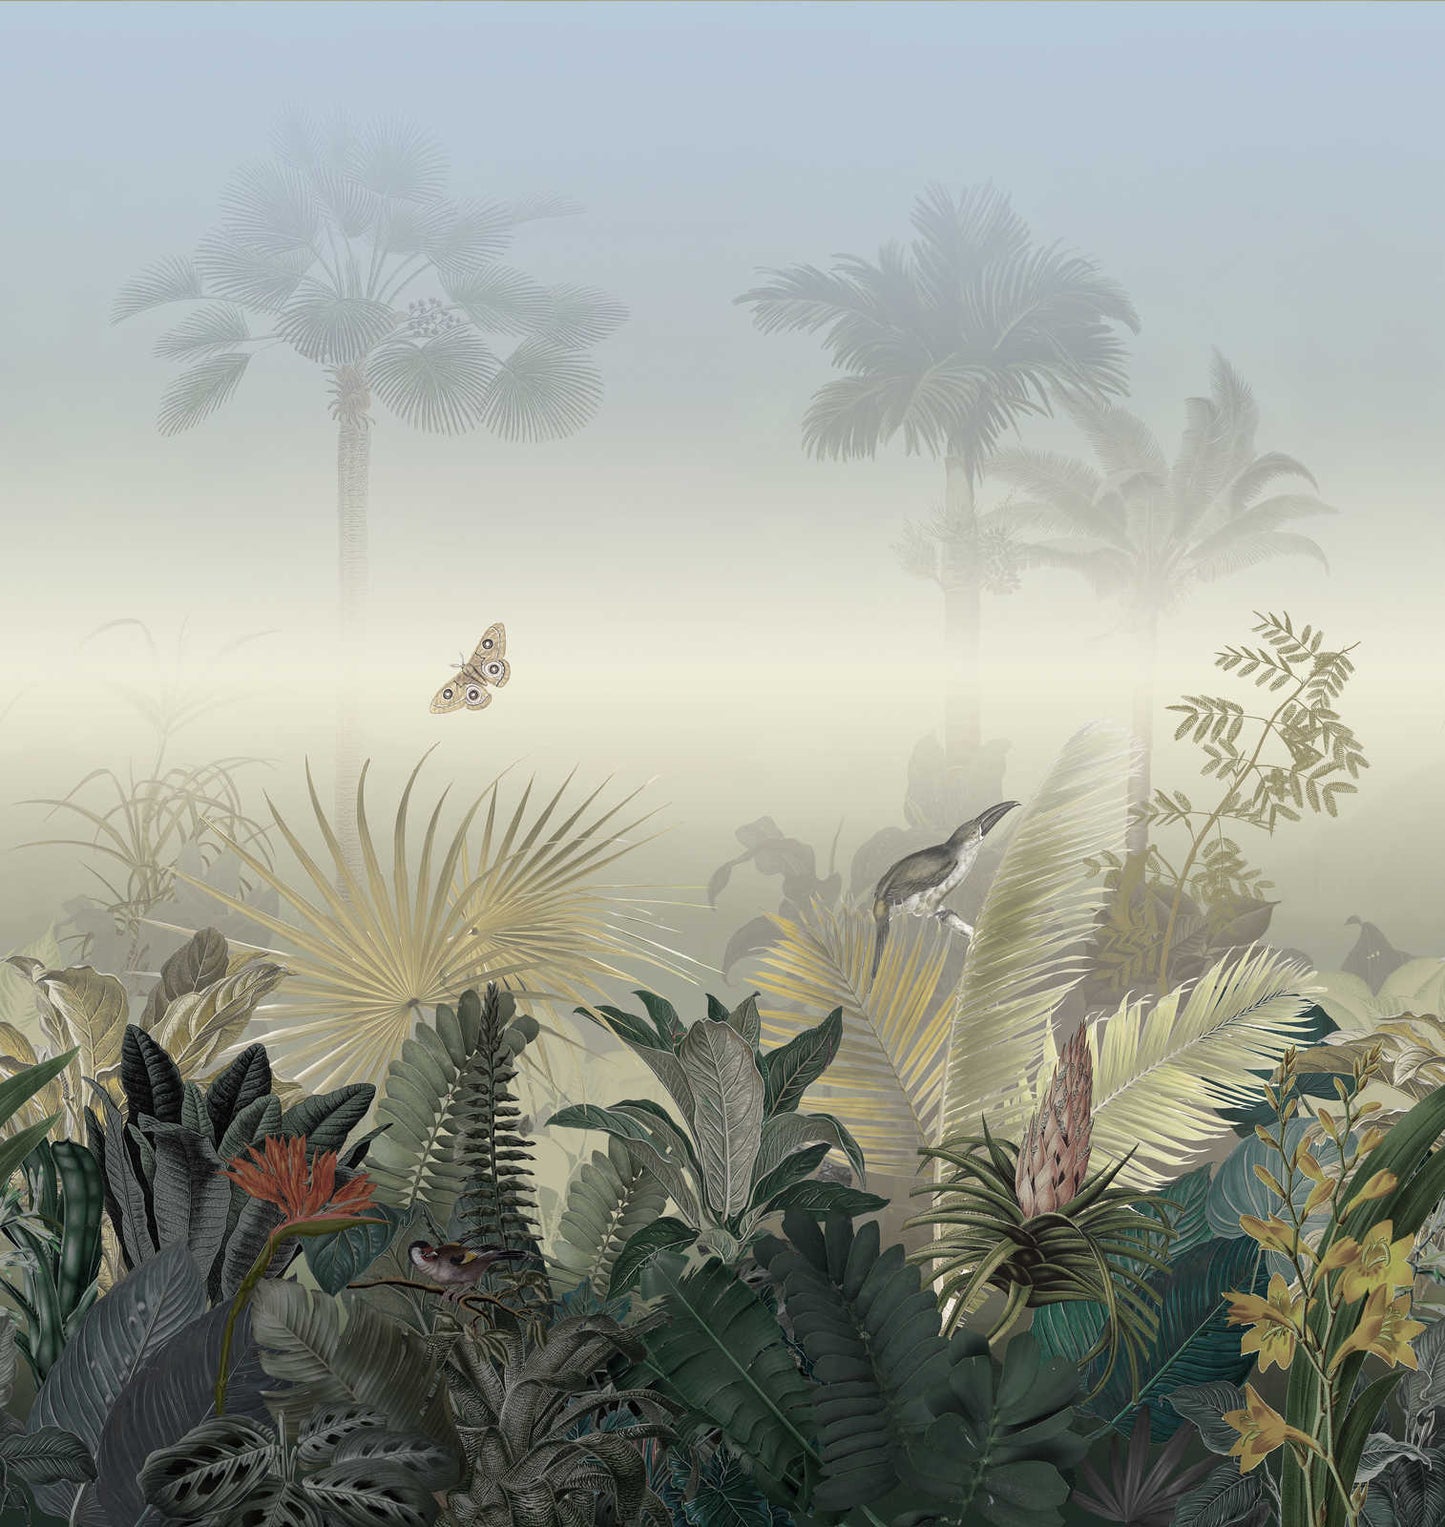 Animals In The Mist